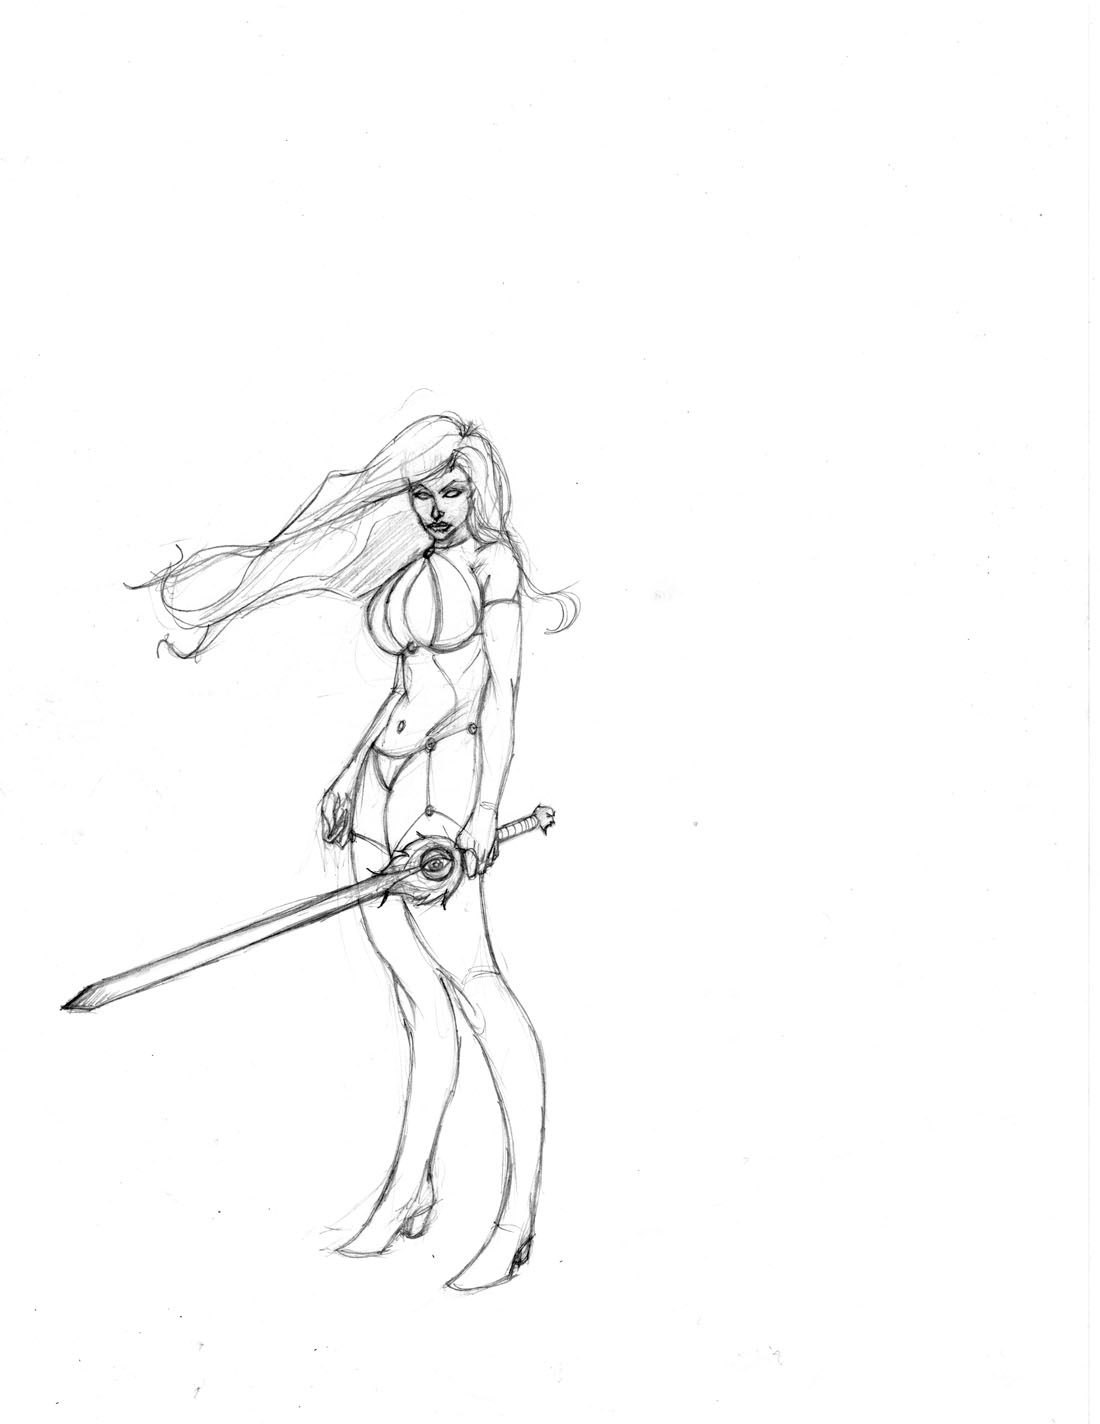 lady death with eyegod sword by Selkirk